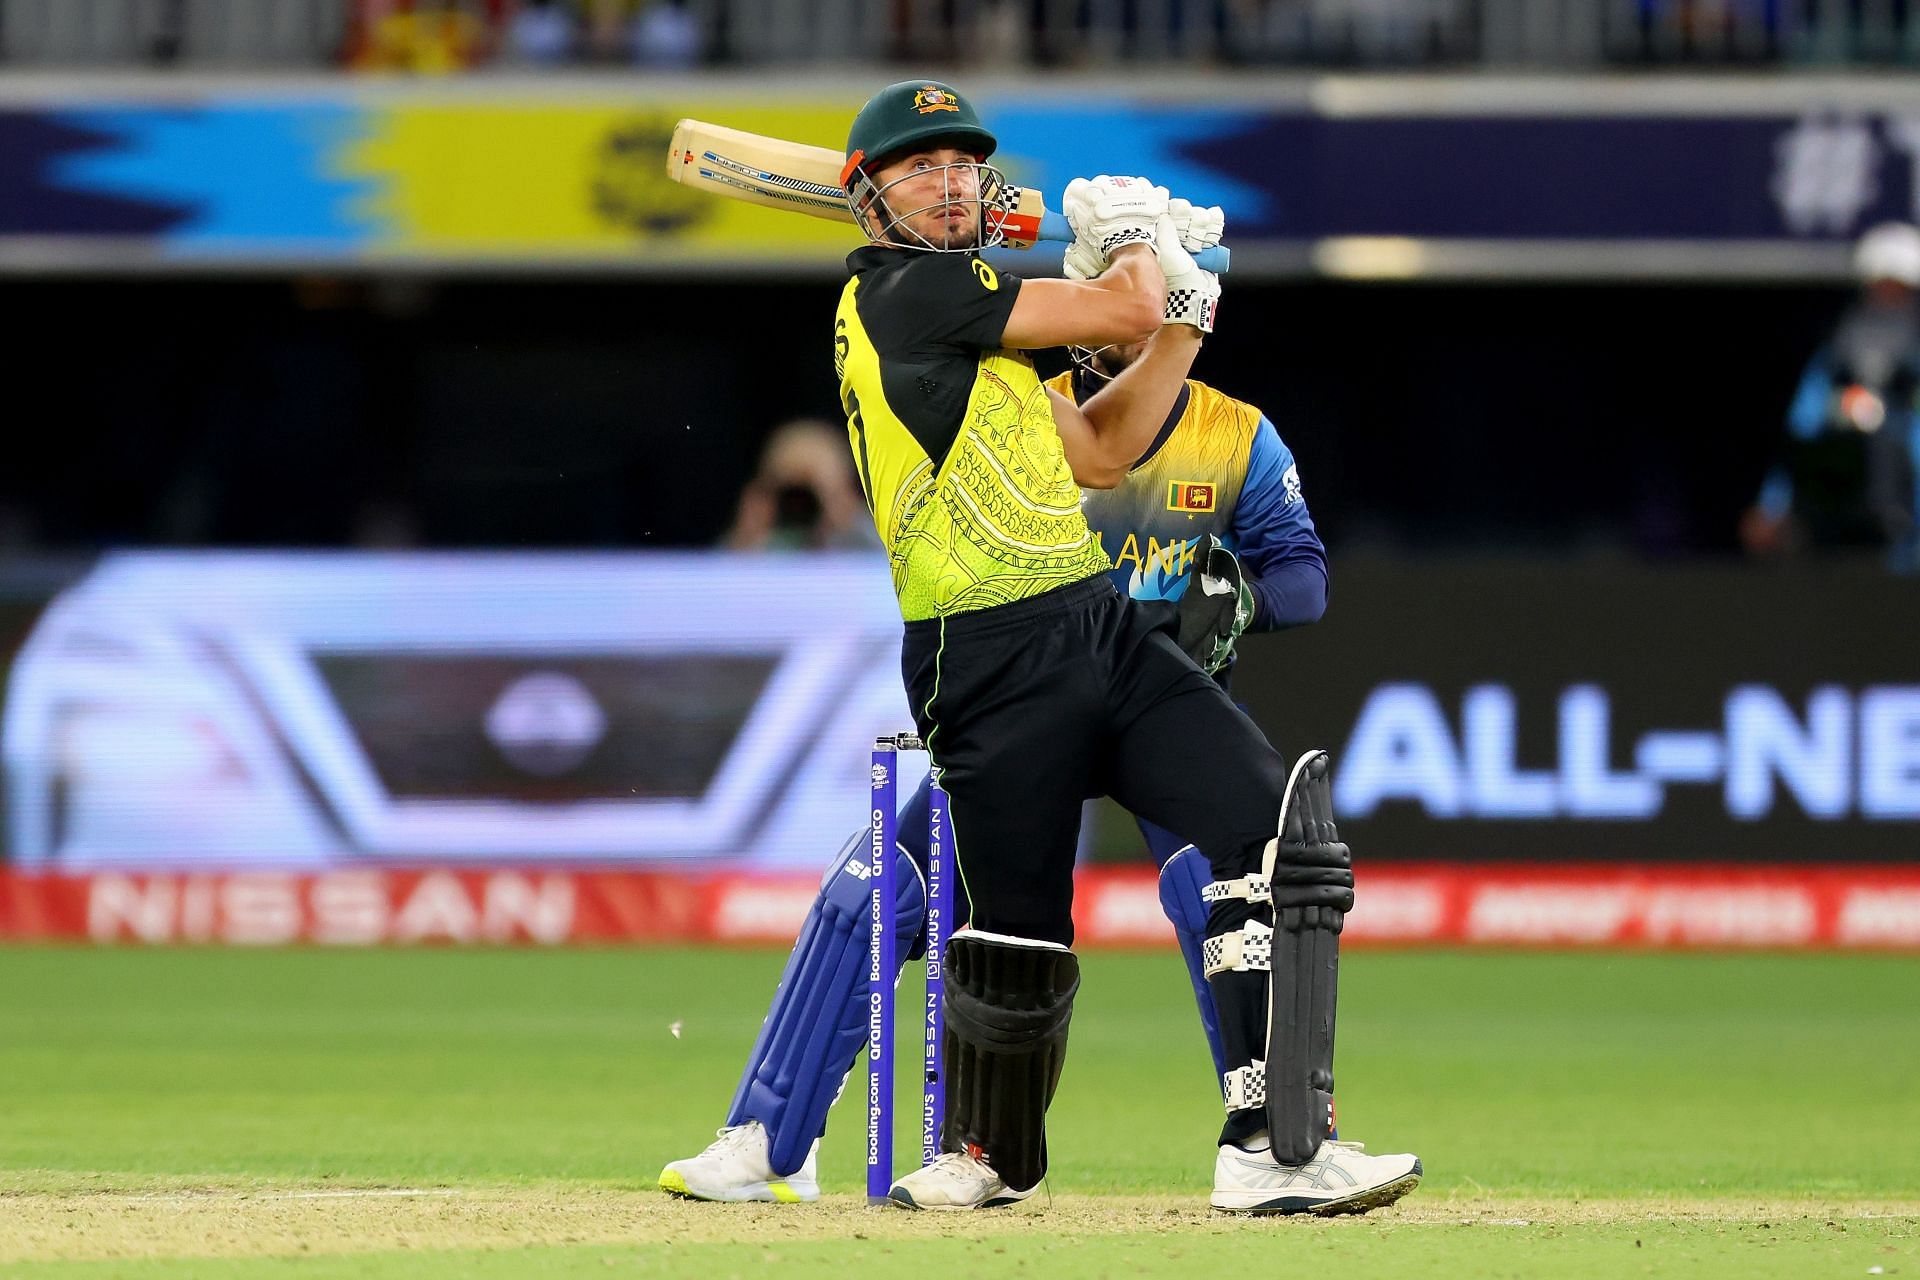 Stoinis hits 17-ball 50 as Australia beats Sri Lanka at WCup